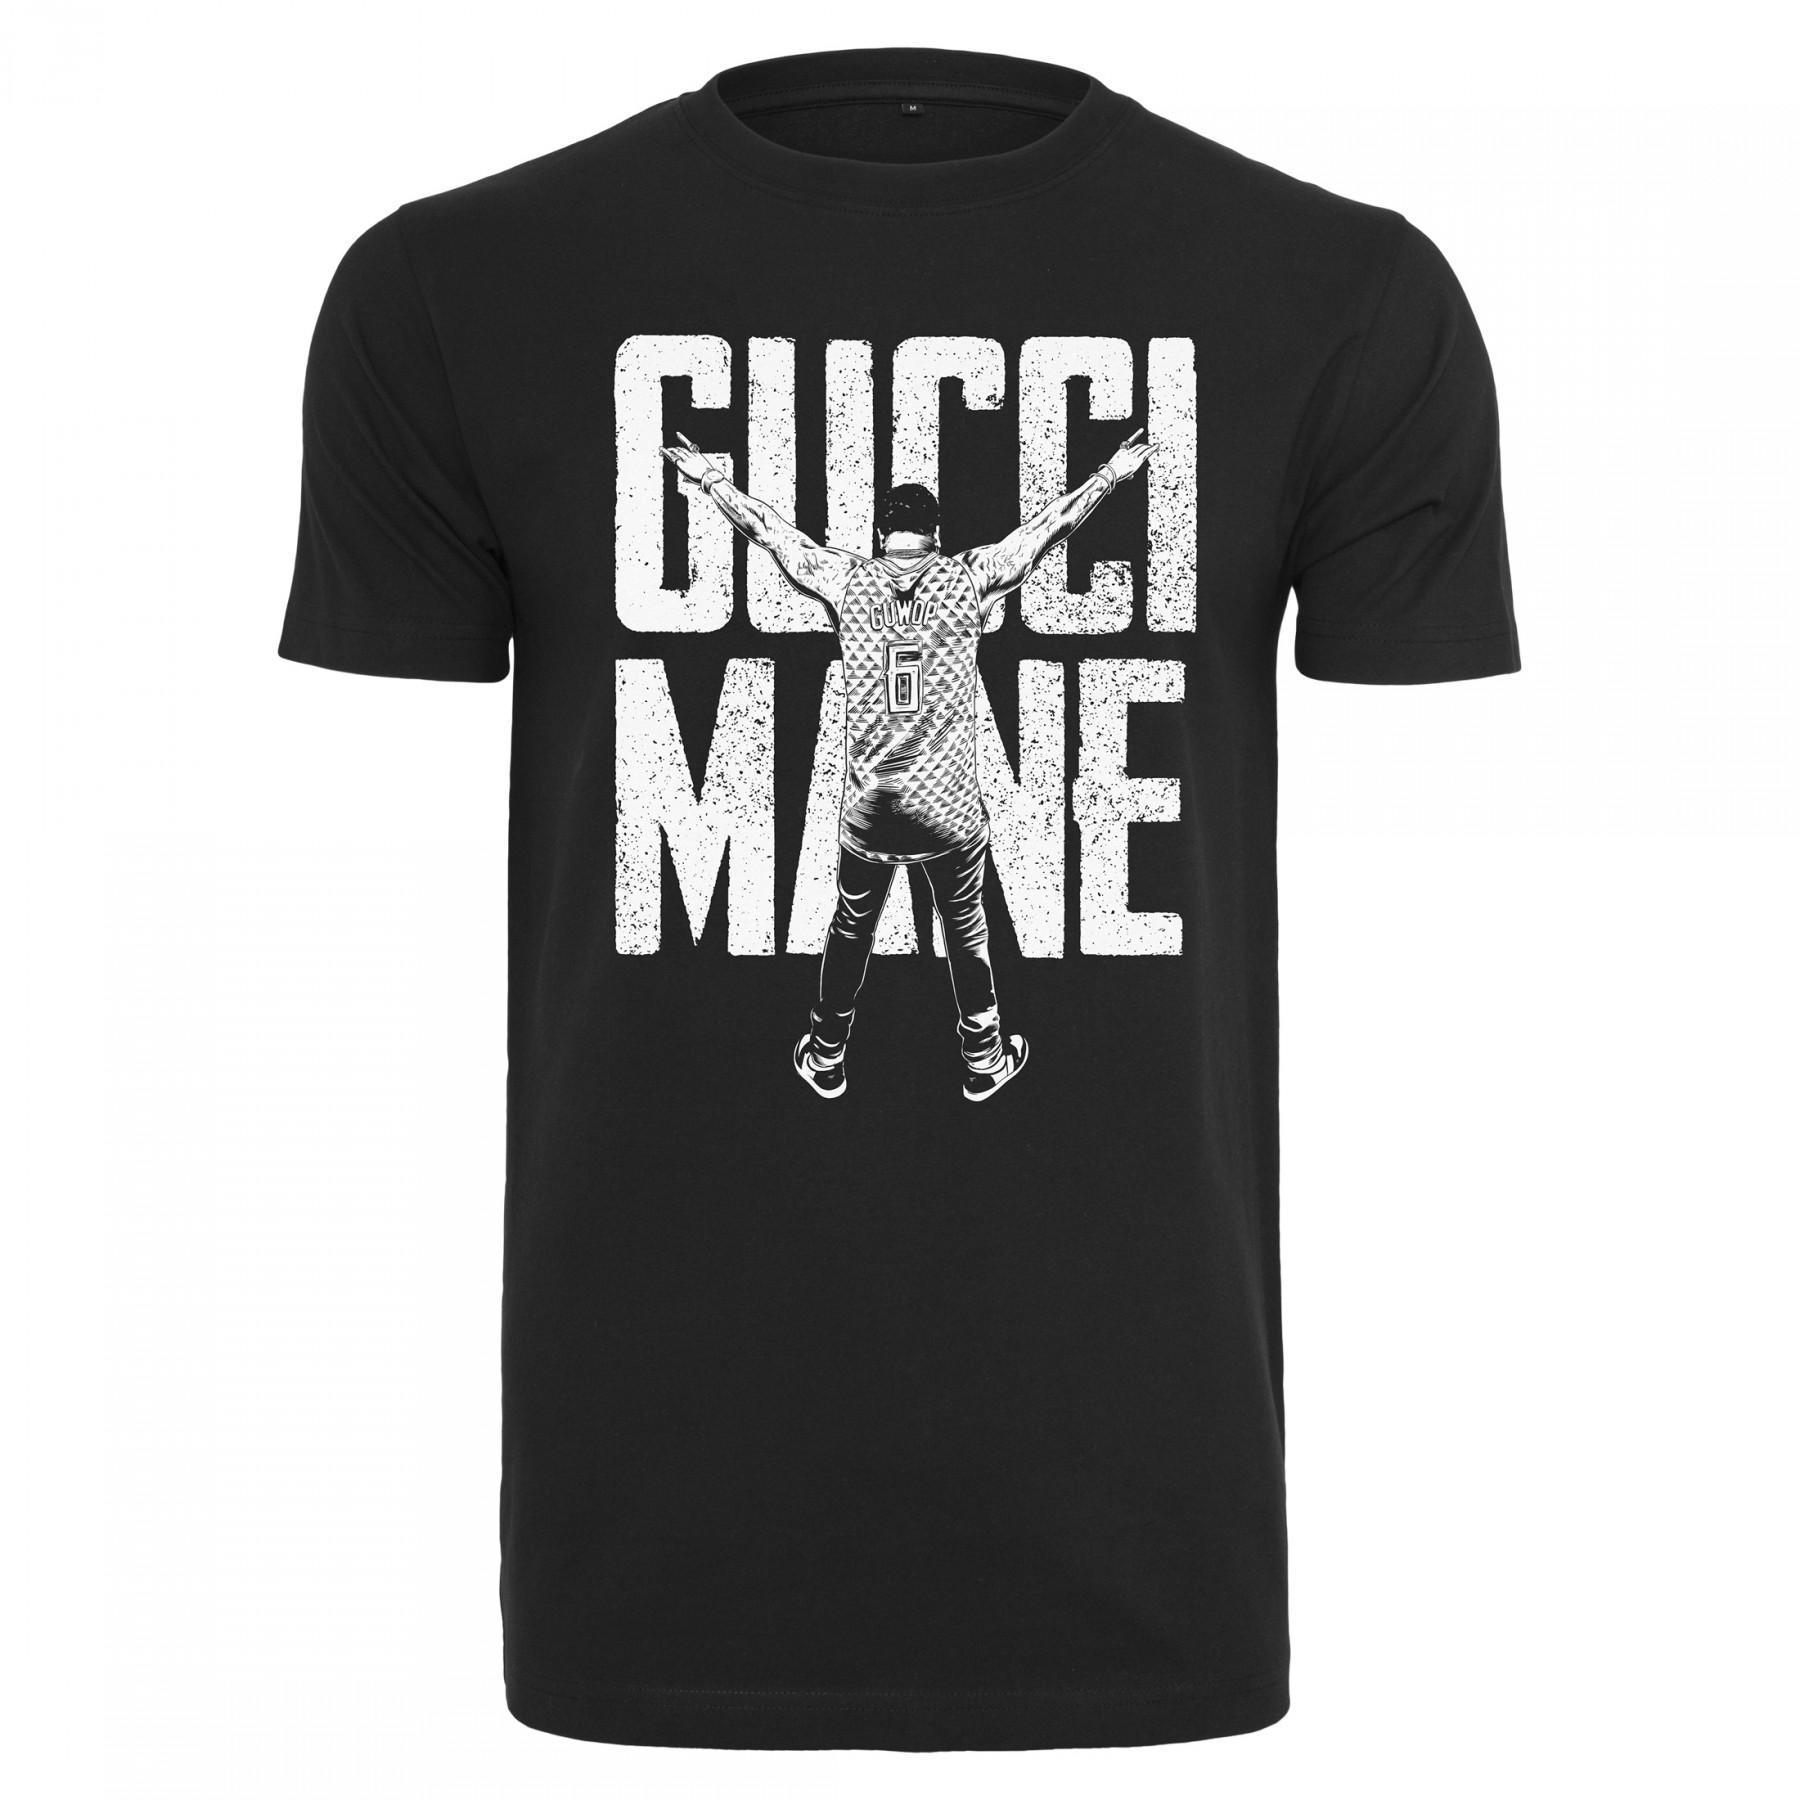 T-shirt urban classic gucci mane guwop tance